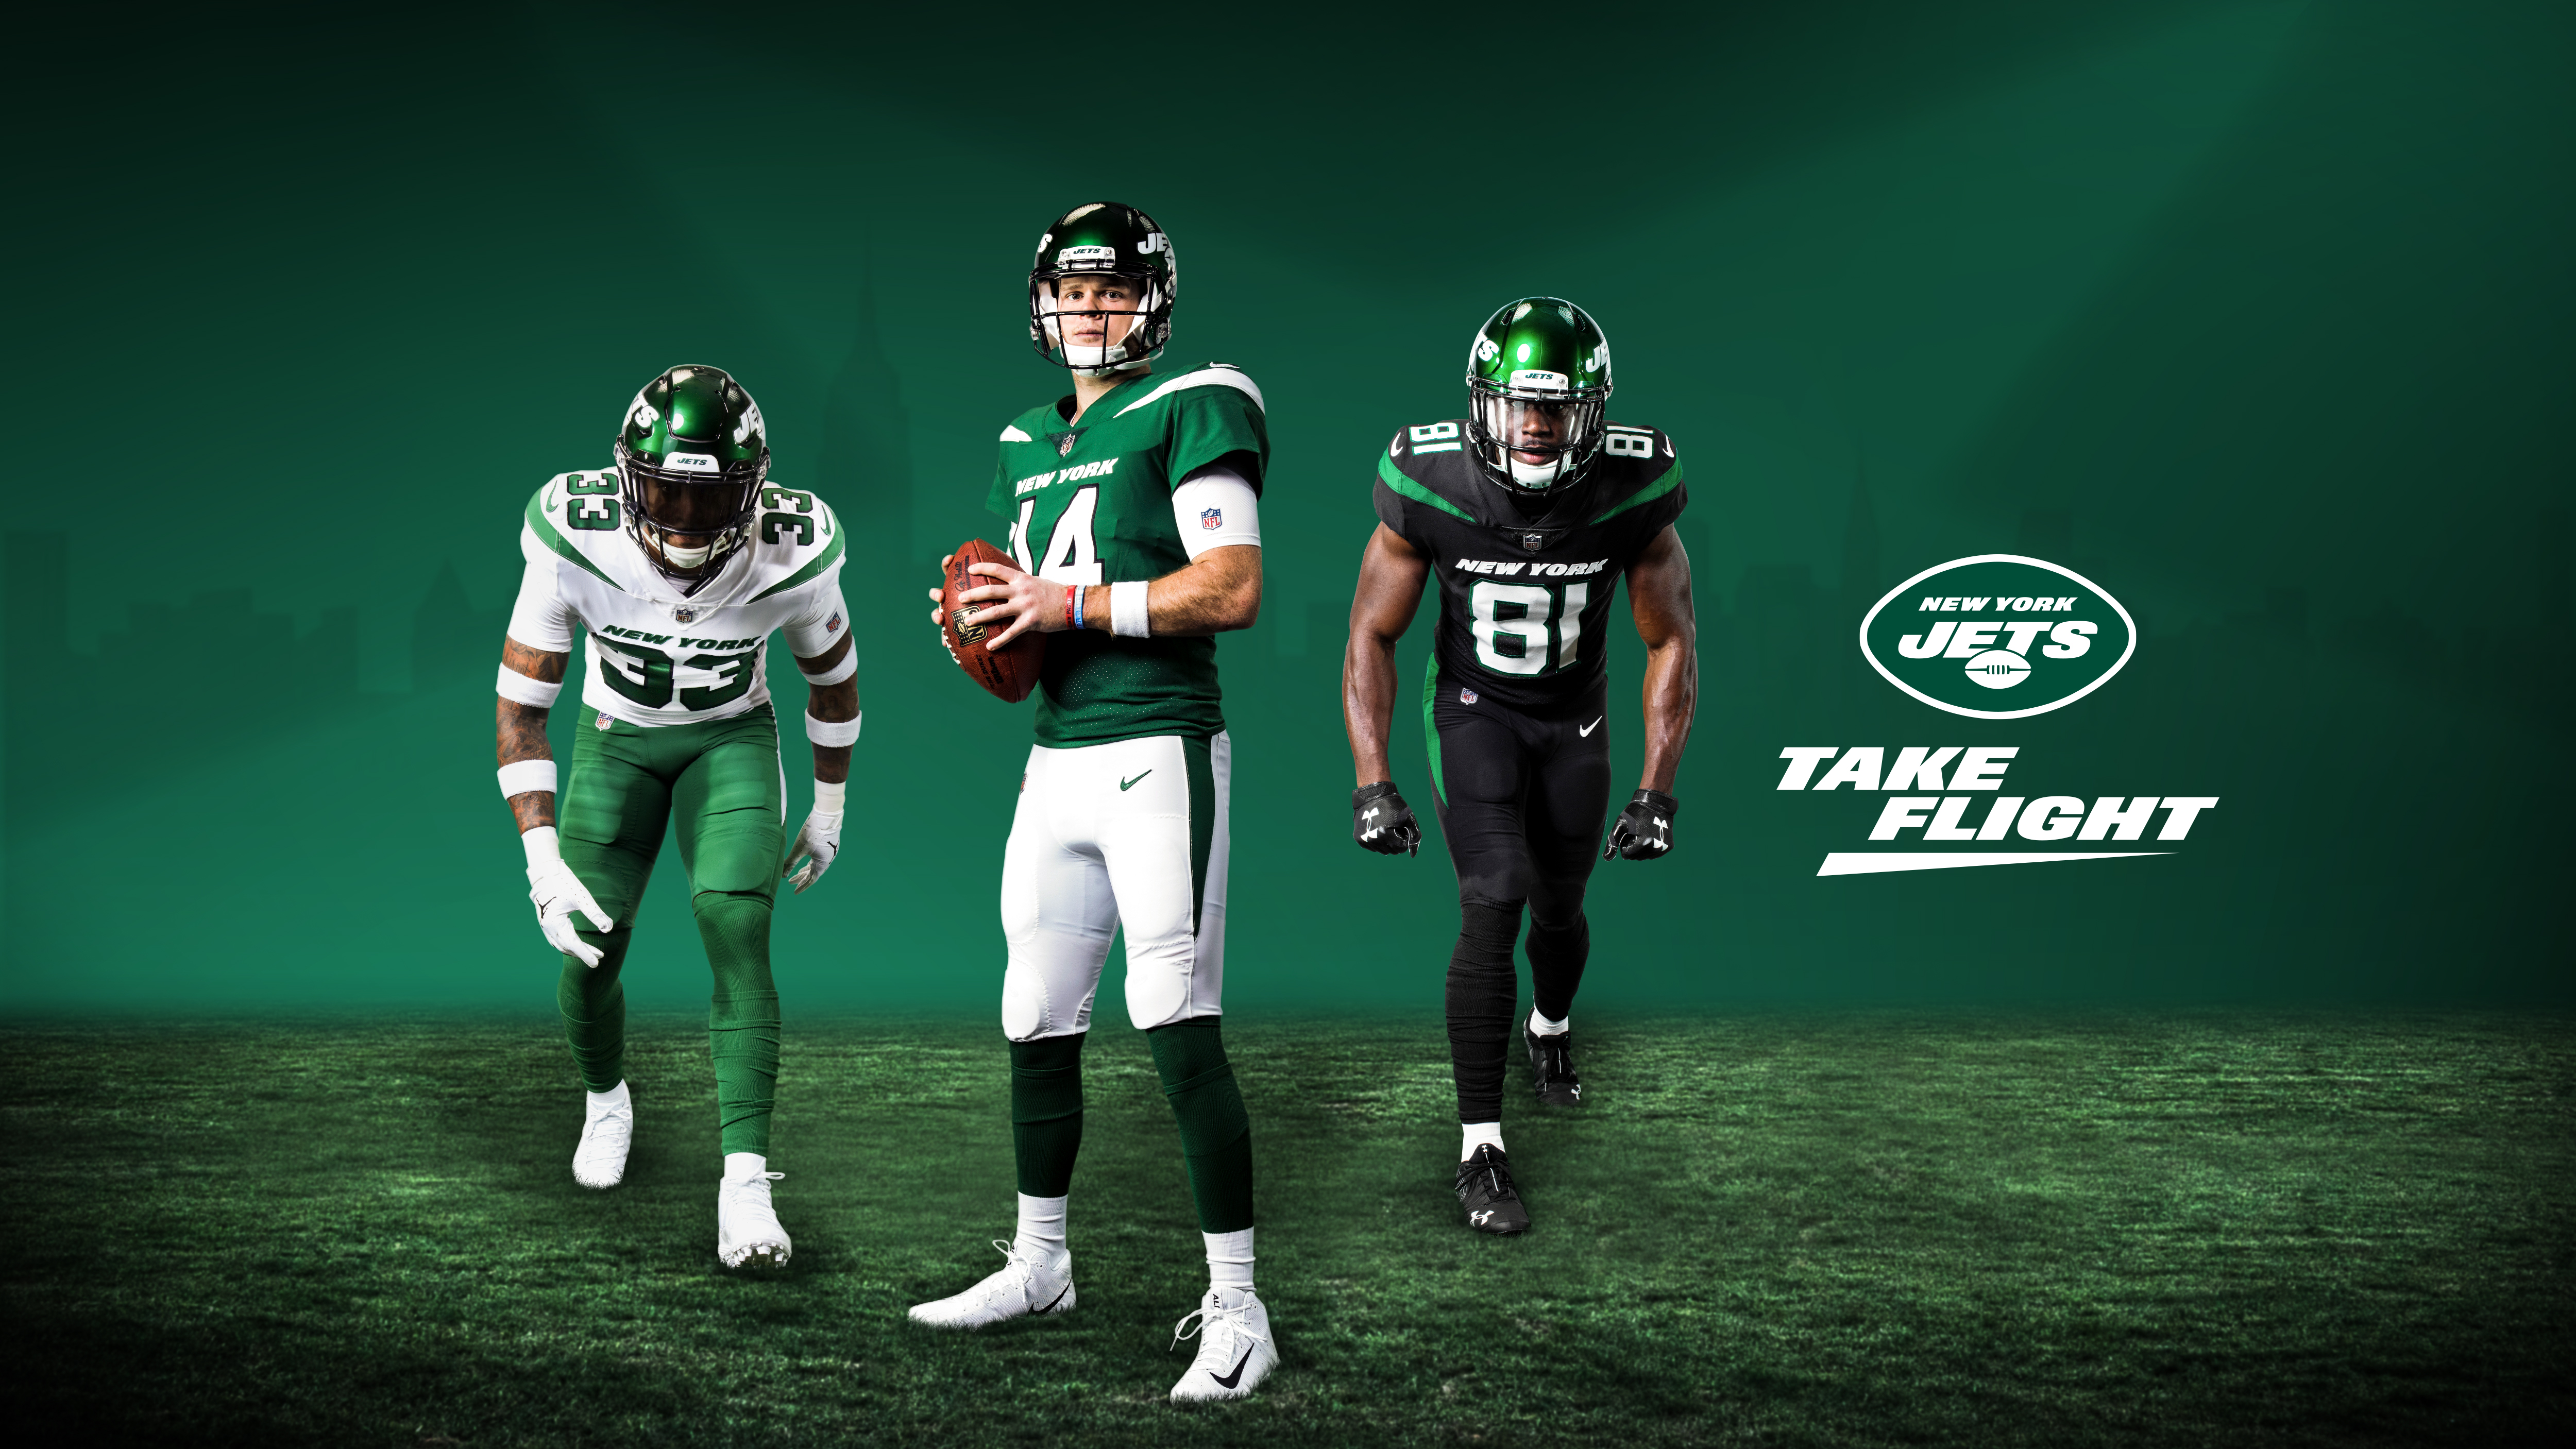 New Jets Uniforms